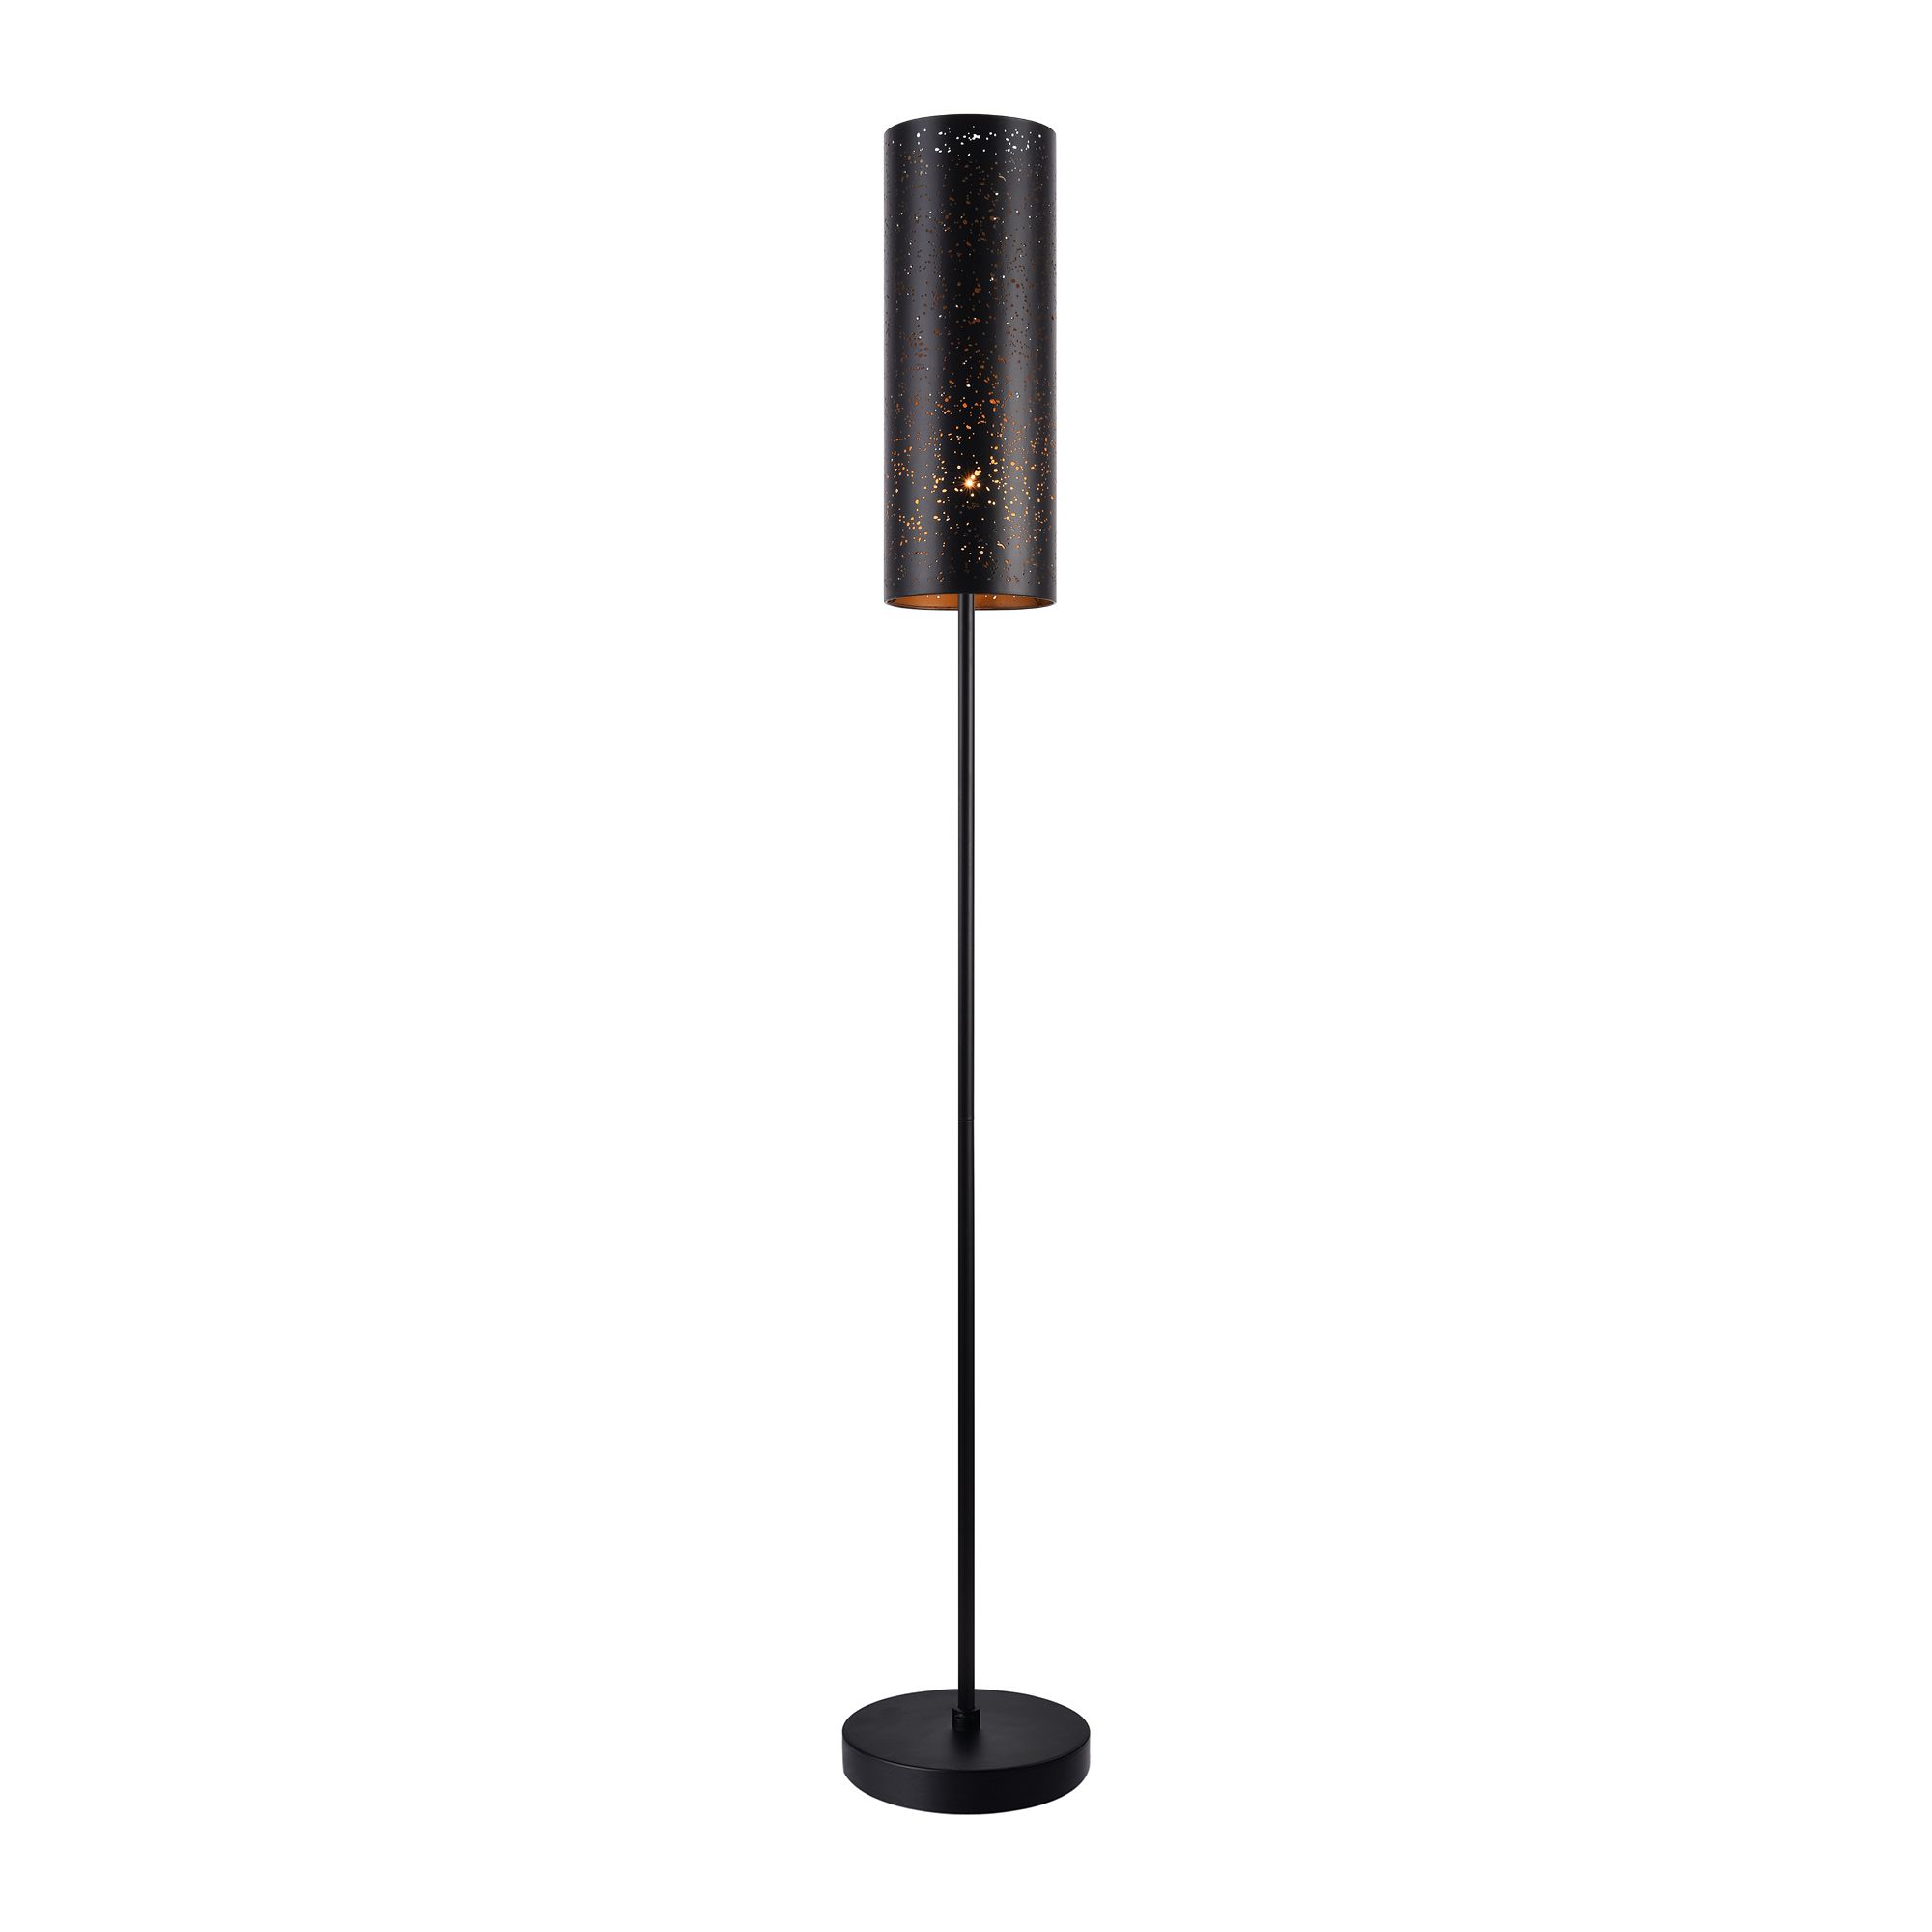 [lux.pro]® Stojací lampa HT168053-B - H.T. Trade Service GmbH & Co. KG